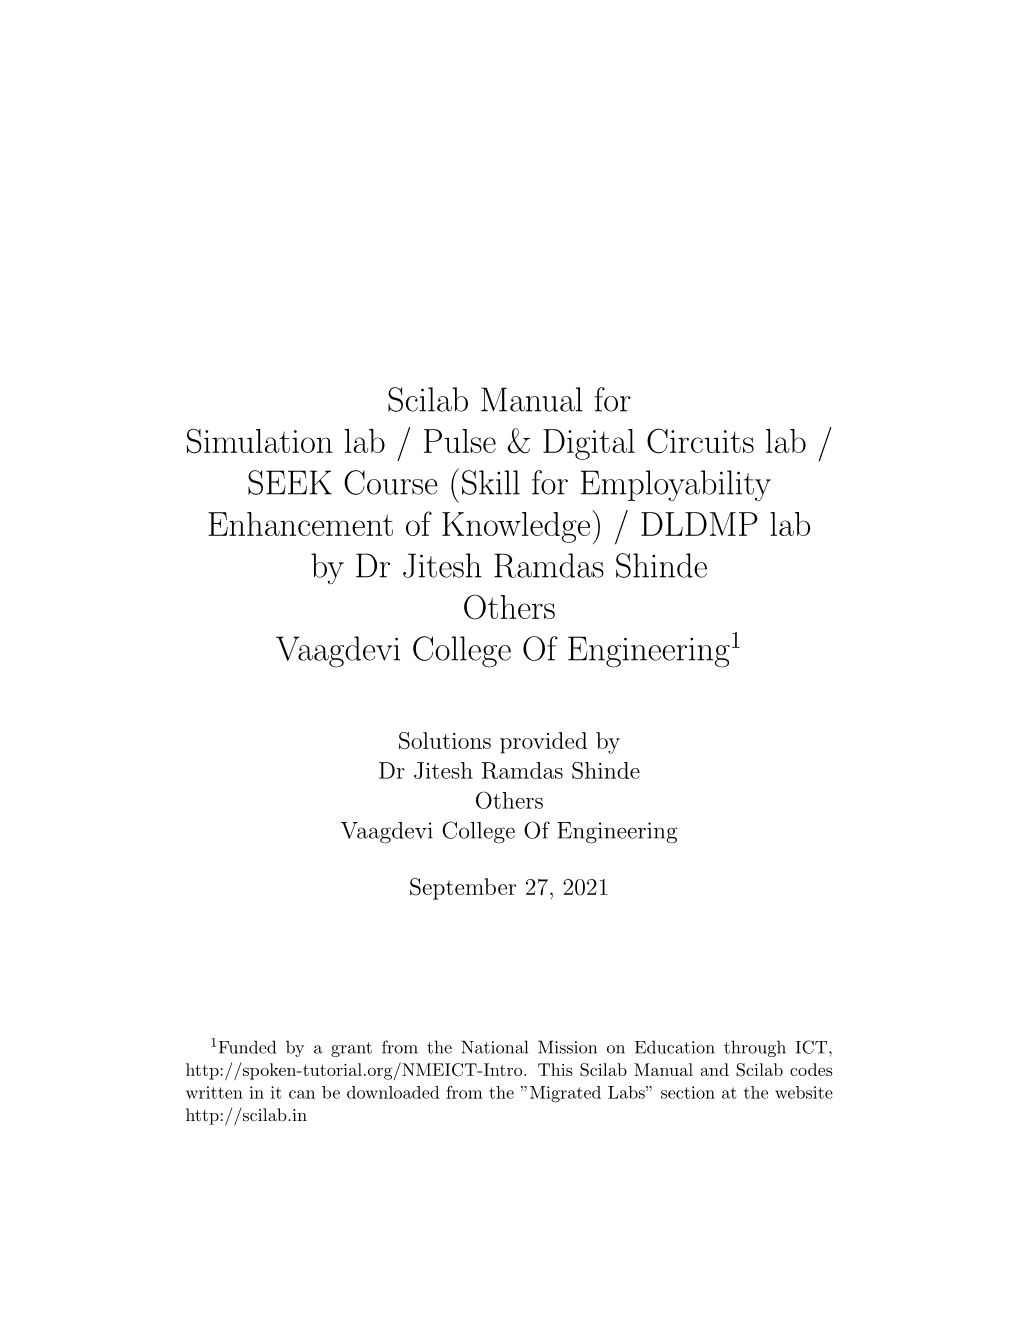 Scilab Manual for Simulation Lab / Pulse & Digital Circuits Lab / SEEK